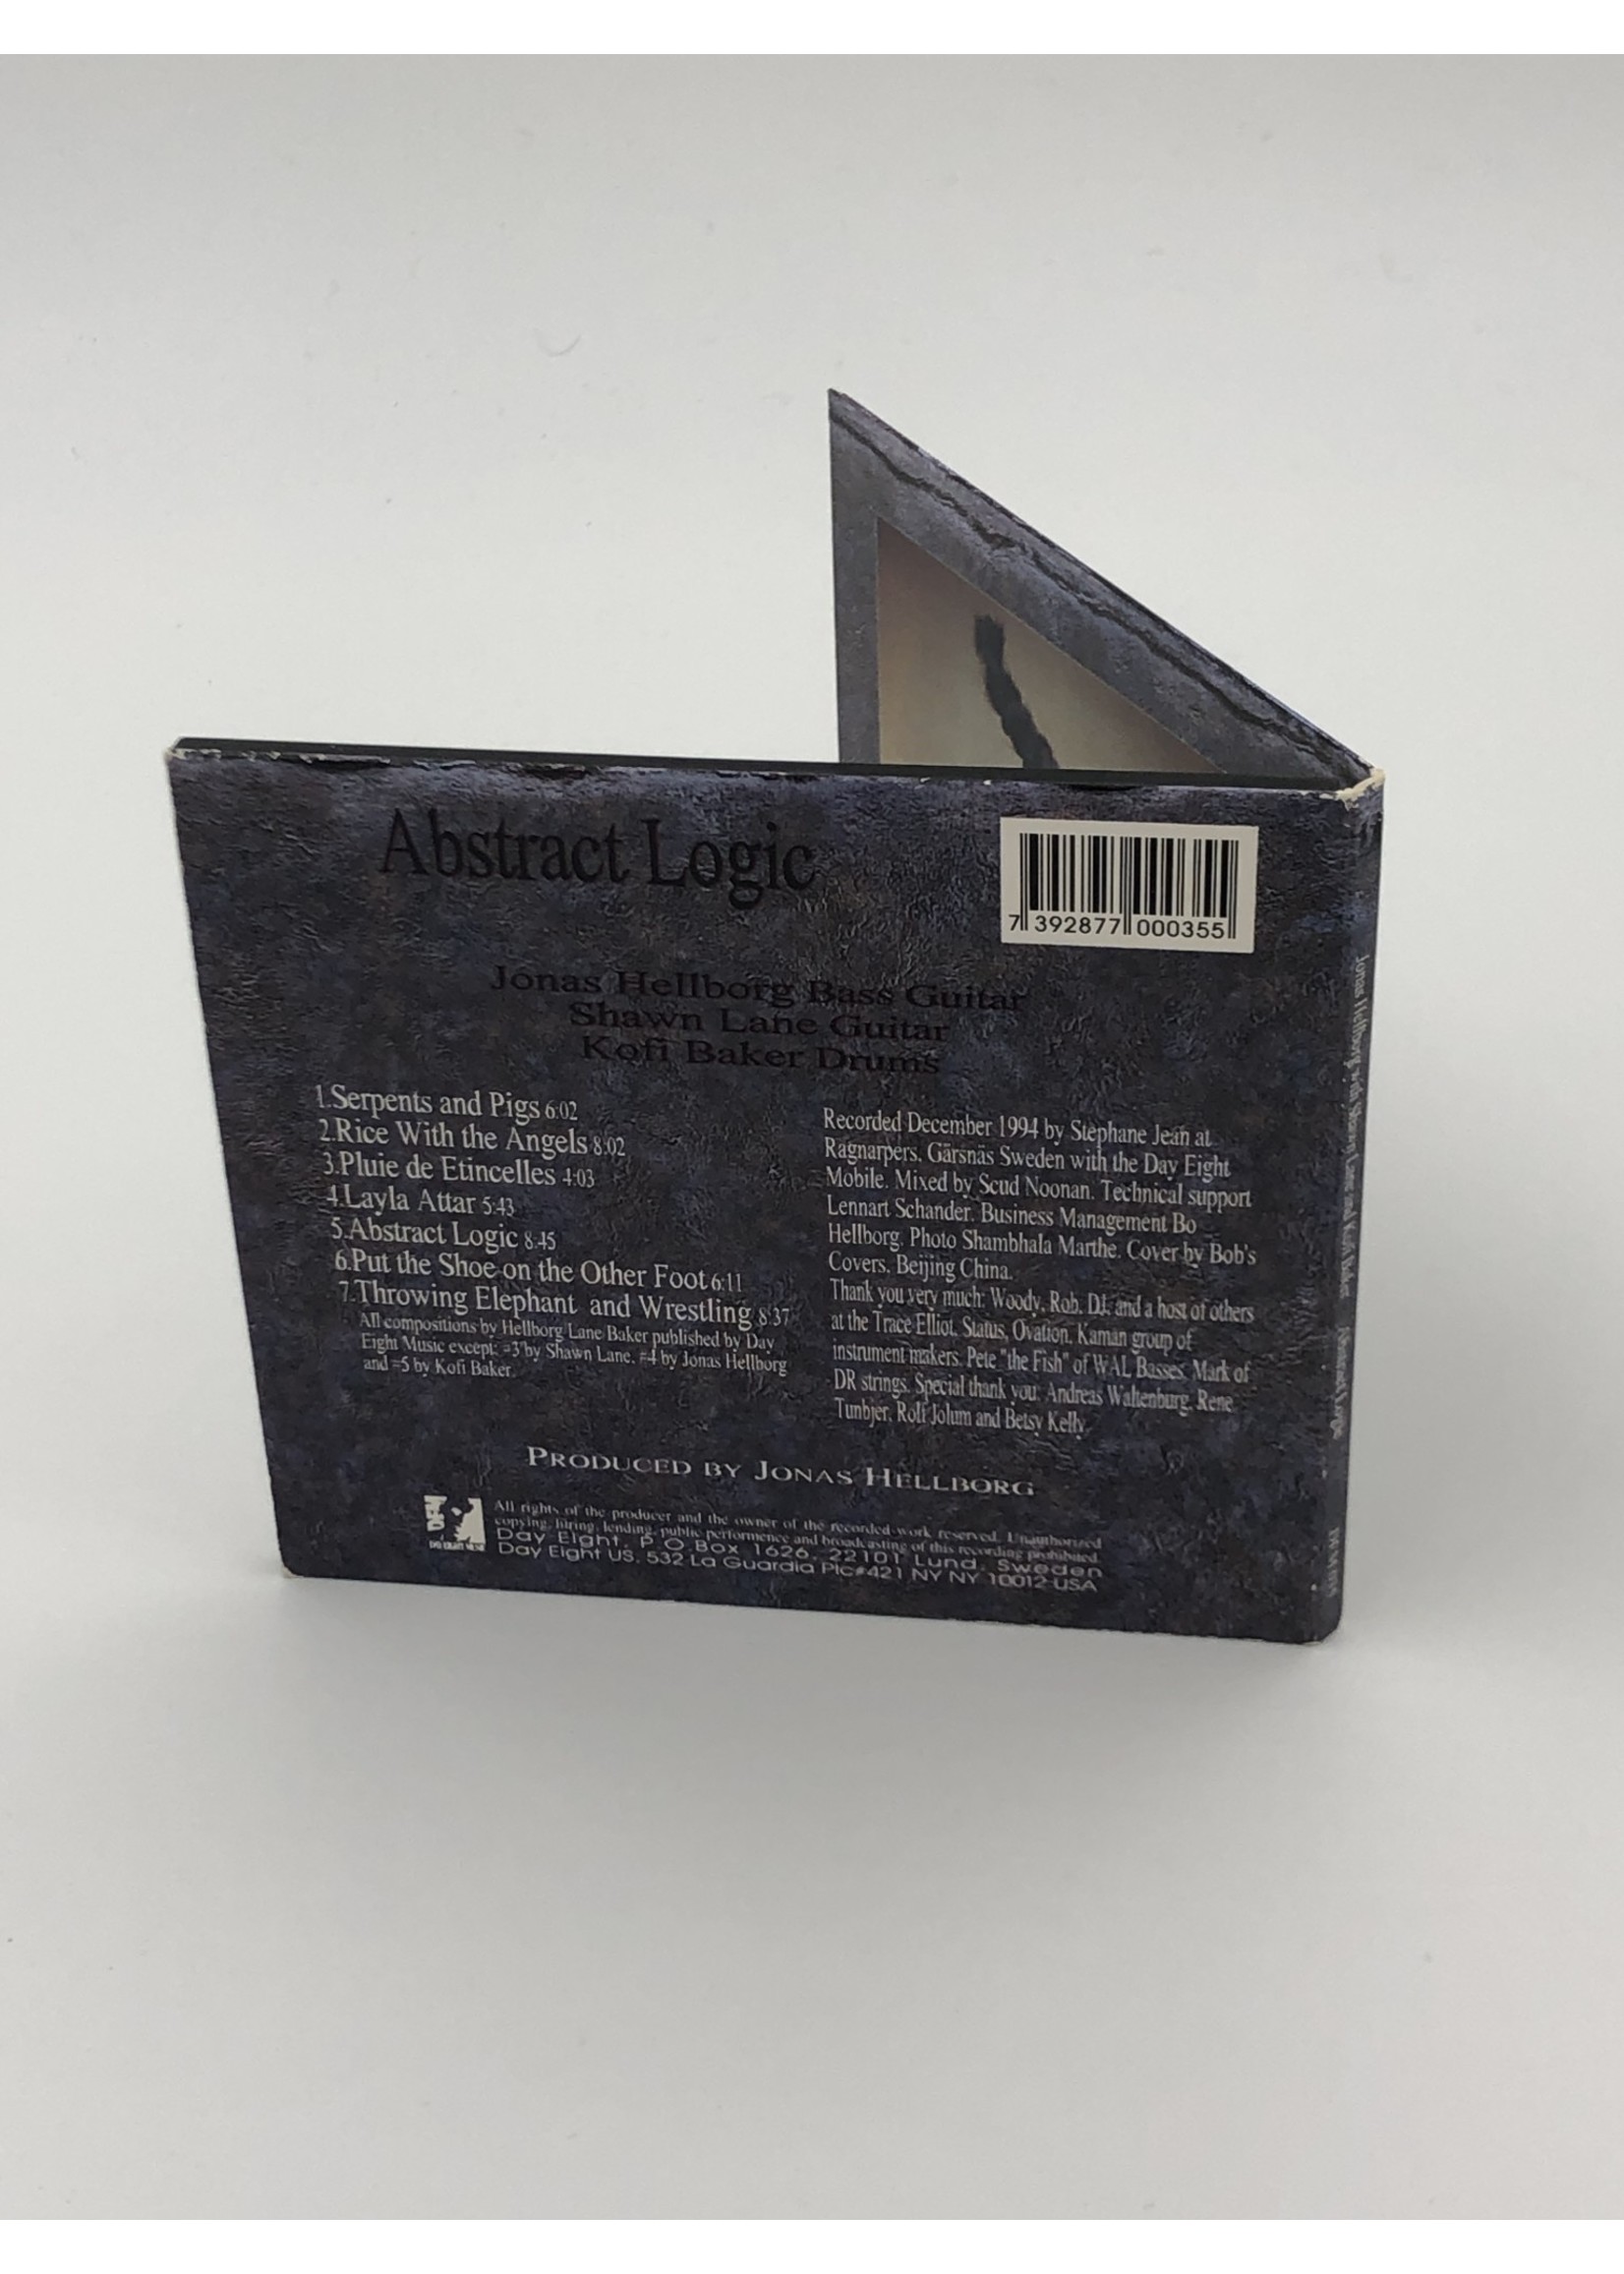 CD Jonas Hellborg with Shawn Lane and Kofi Baker: Abstract Logic CD